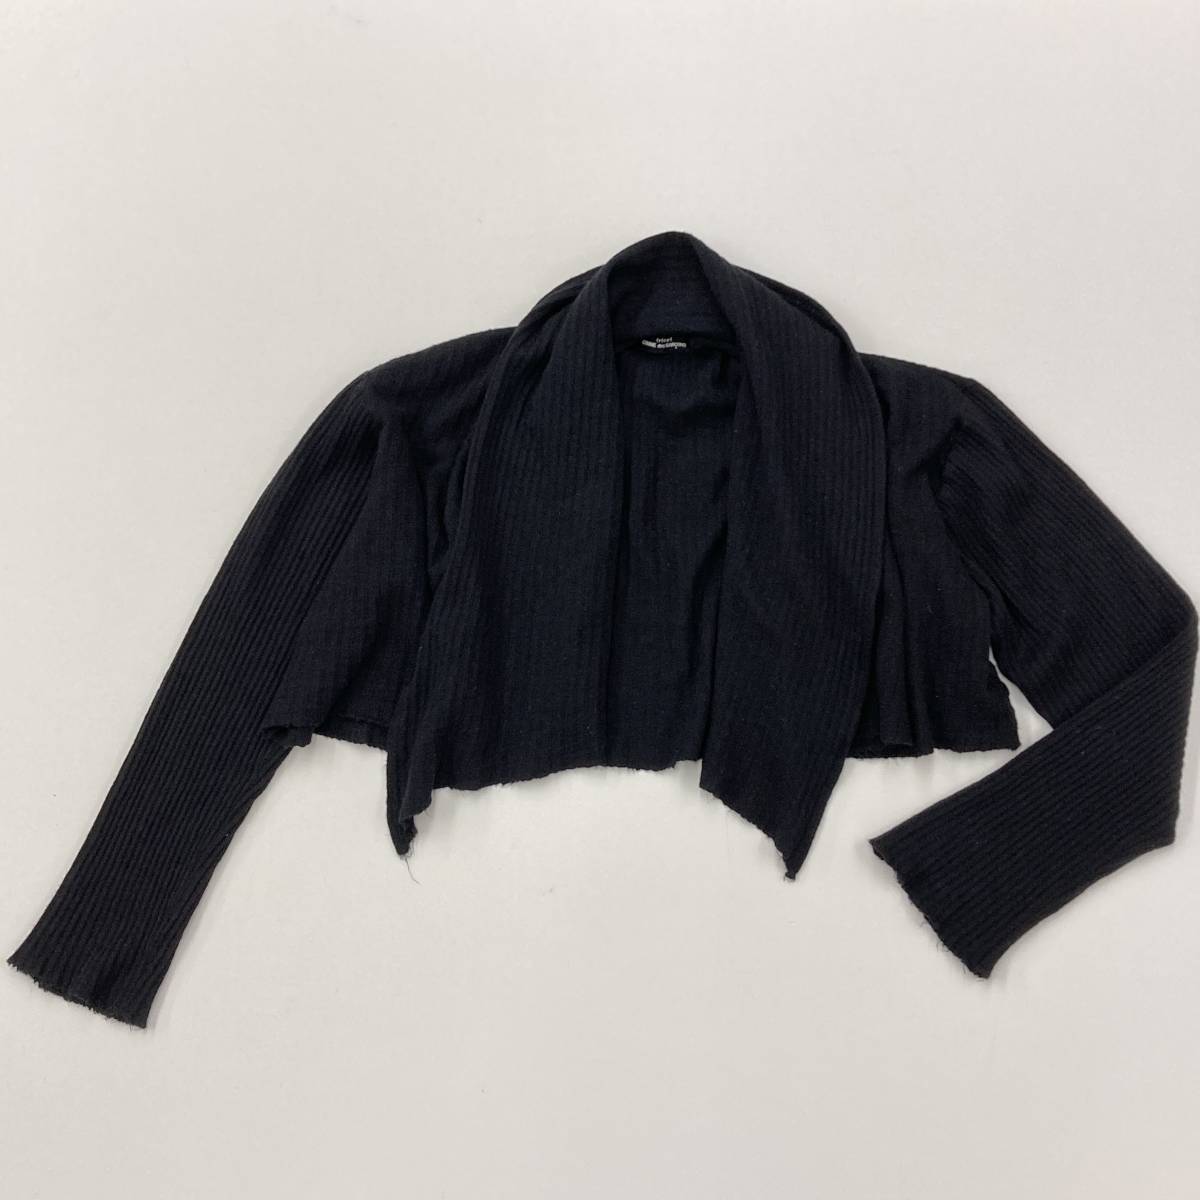 AD1991 Toriko Comme des Garcons деформация ребра вязаный короткий кардиган чёрный tricot шаль болеро 90s VINTAGE archive 2120247